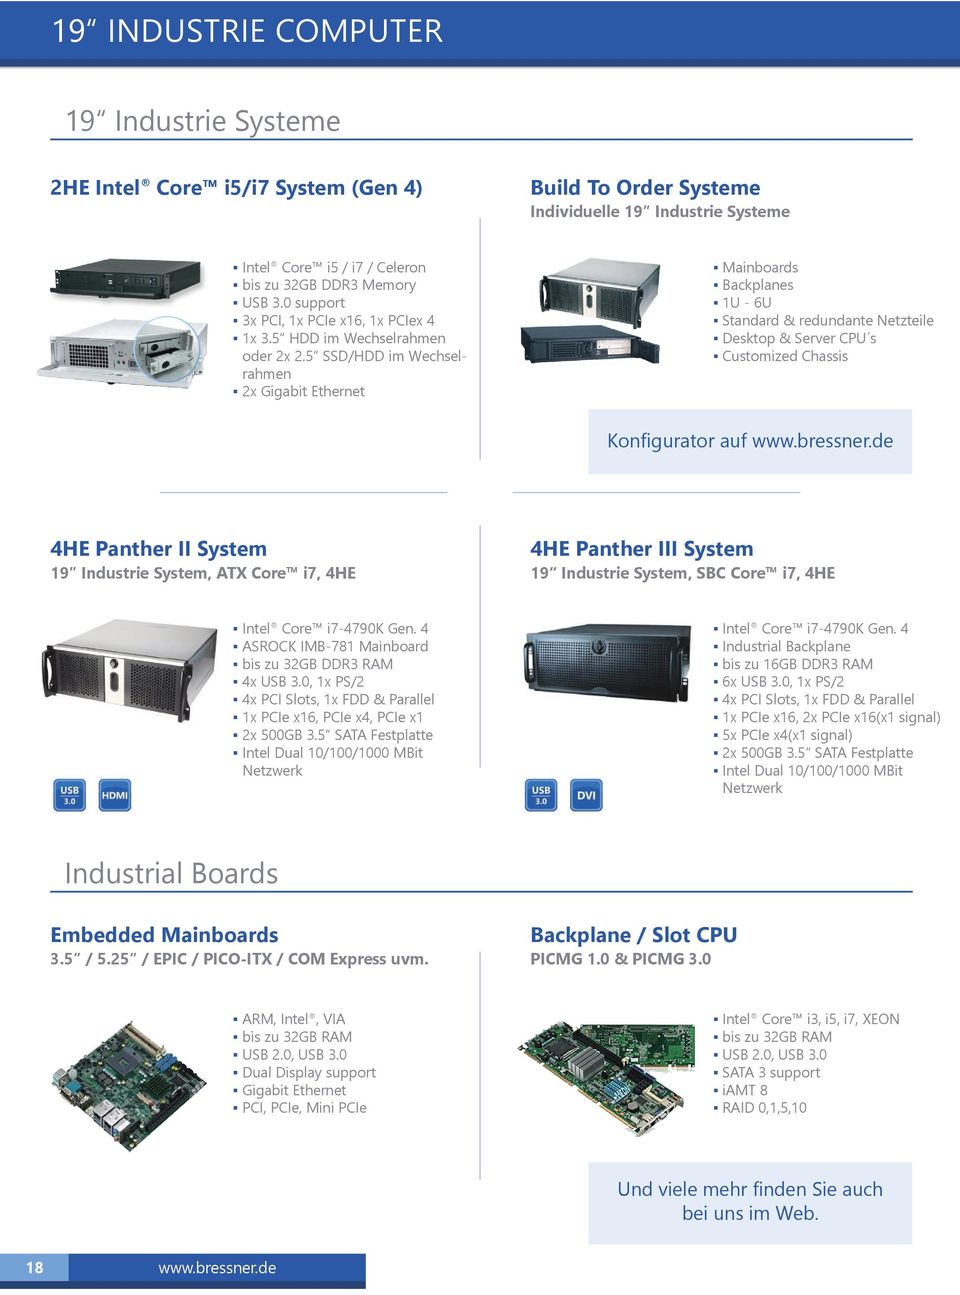 5 SSD/HDD im Wechselrahmen 2x Gigabit Ethernet Mainboards Backplanes 1U - 6U Standard & redundante Netzteile Desktop & Server CPU s Customized Chassis Konfigurator auf 4HE Panther II System 19